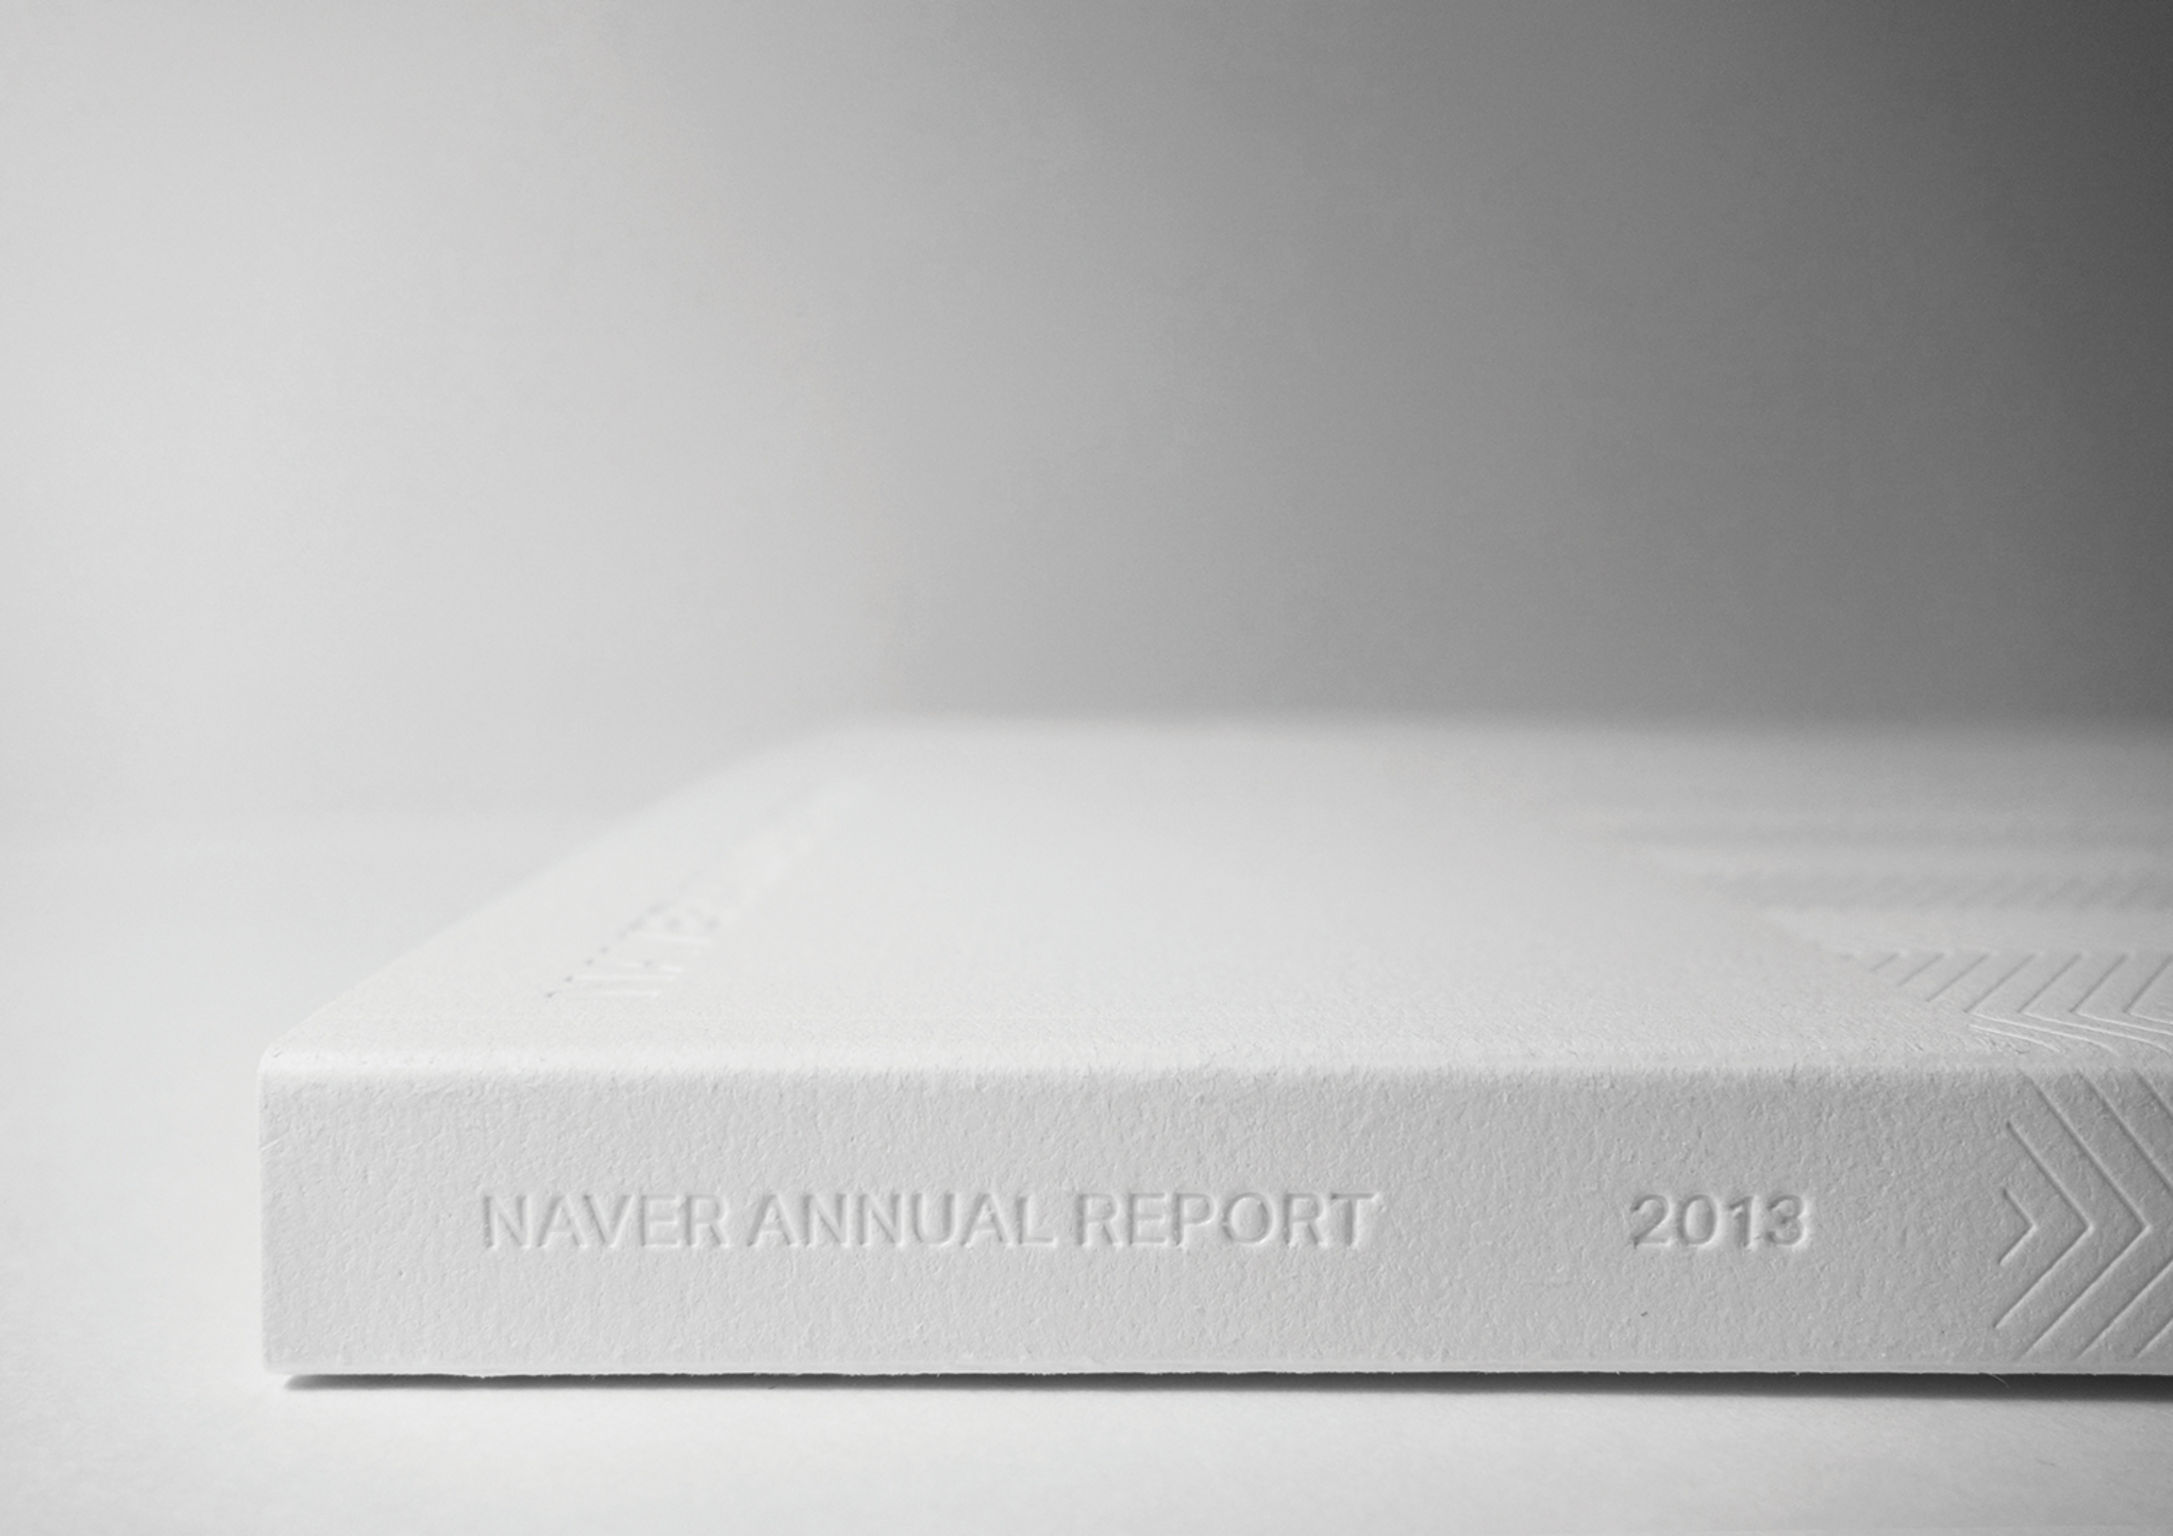 NAVER Annual Report 2014